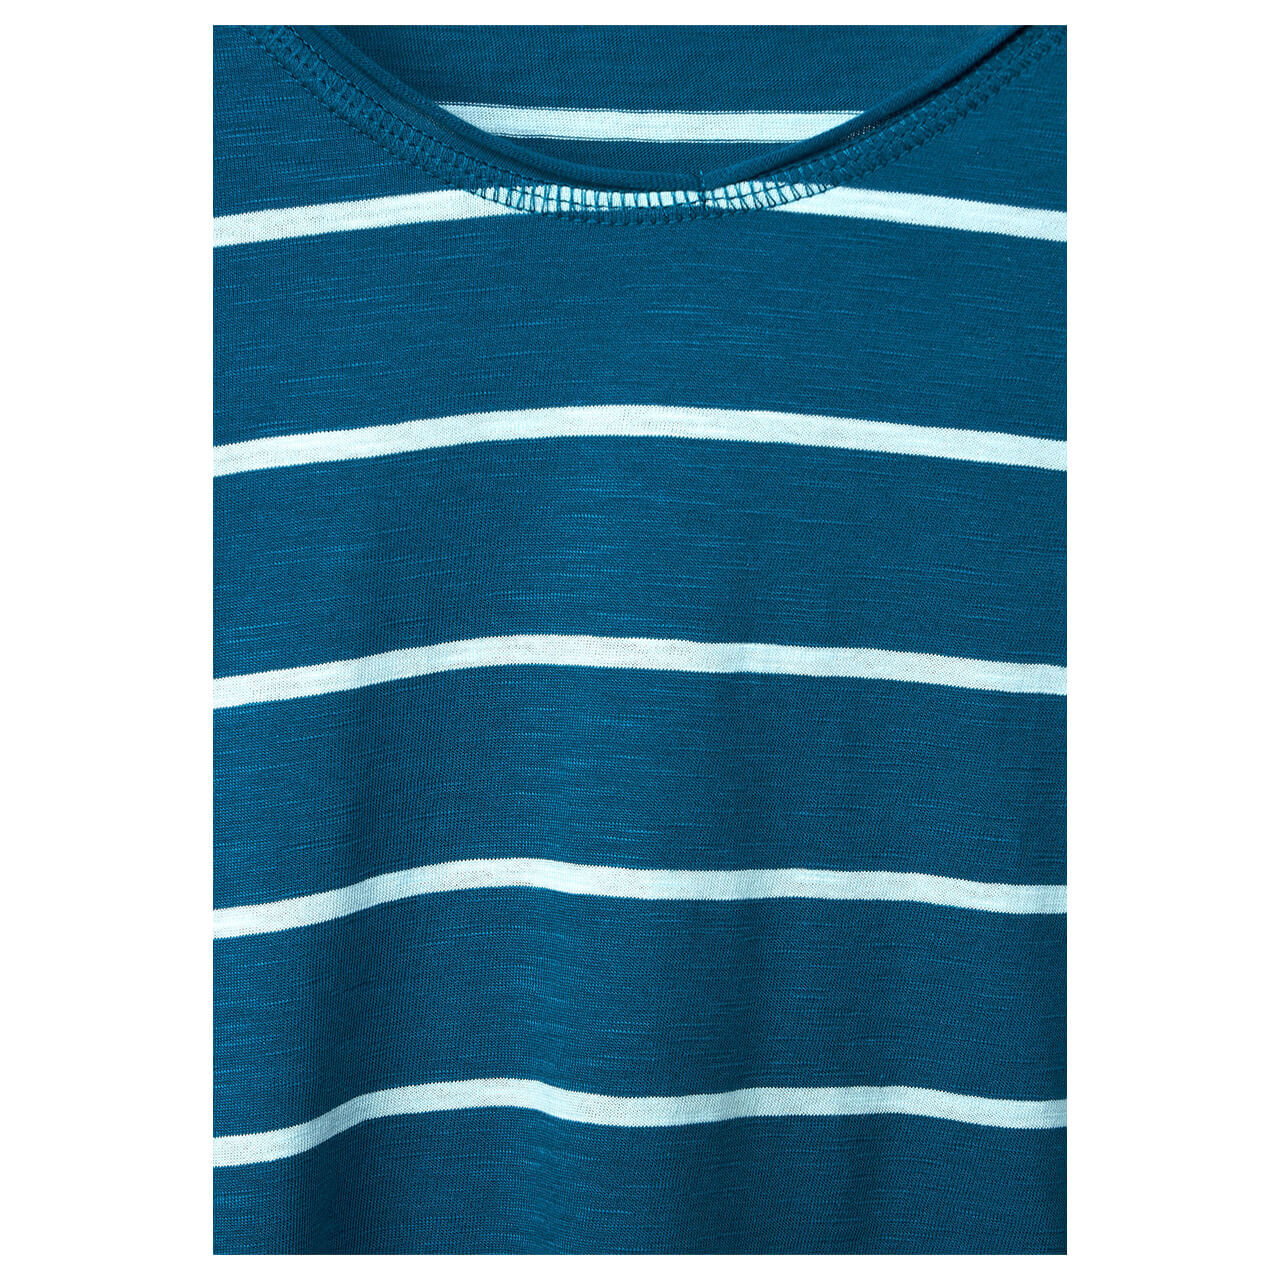 Cecil Stripe Rounded V-Neck T-Shirt teal blue stripes